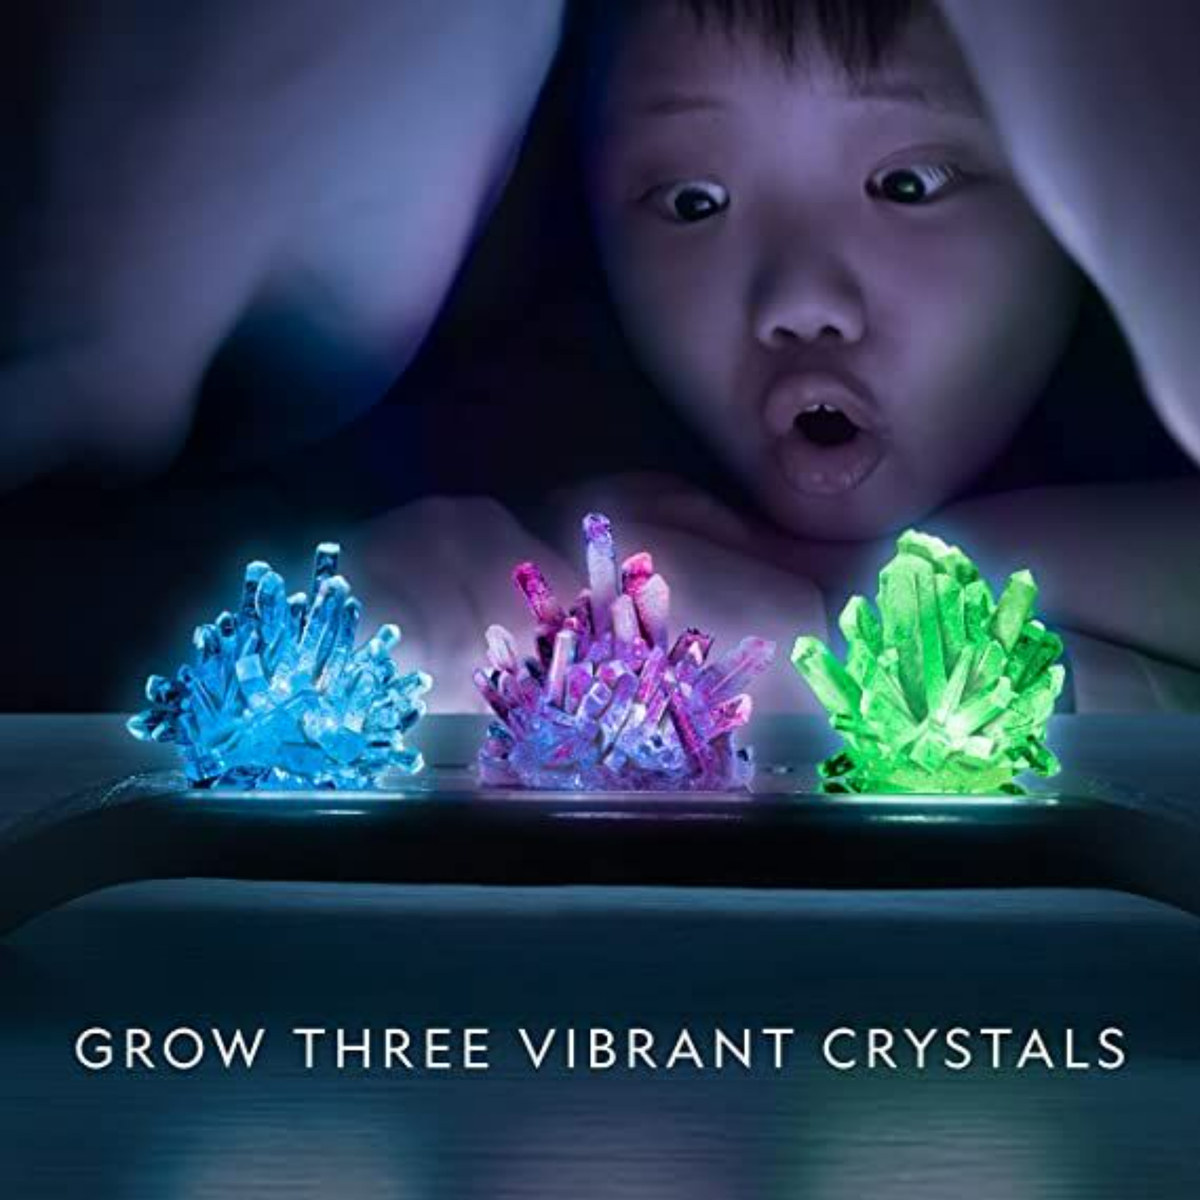 National Geographic Crystal Growing Lab Set, LITCRYSTALINT